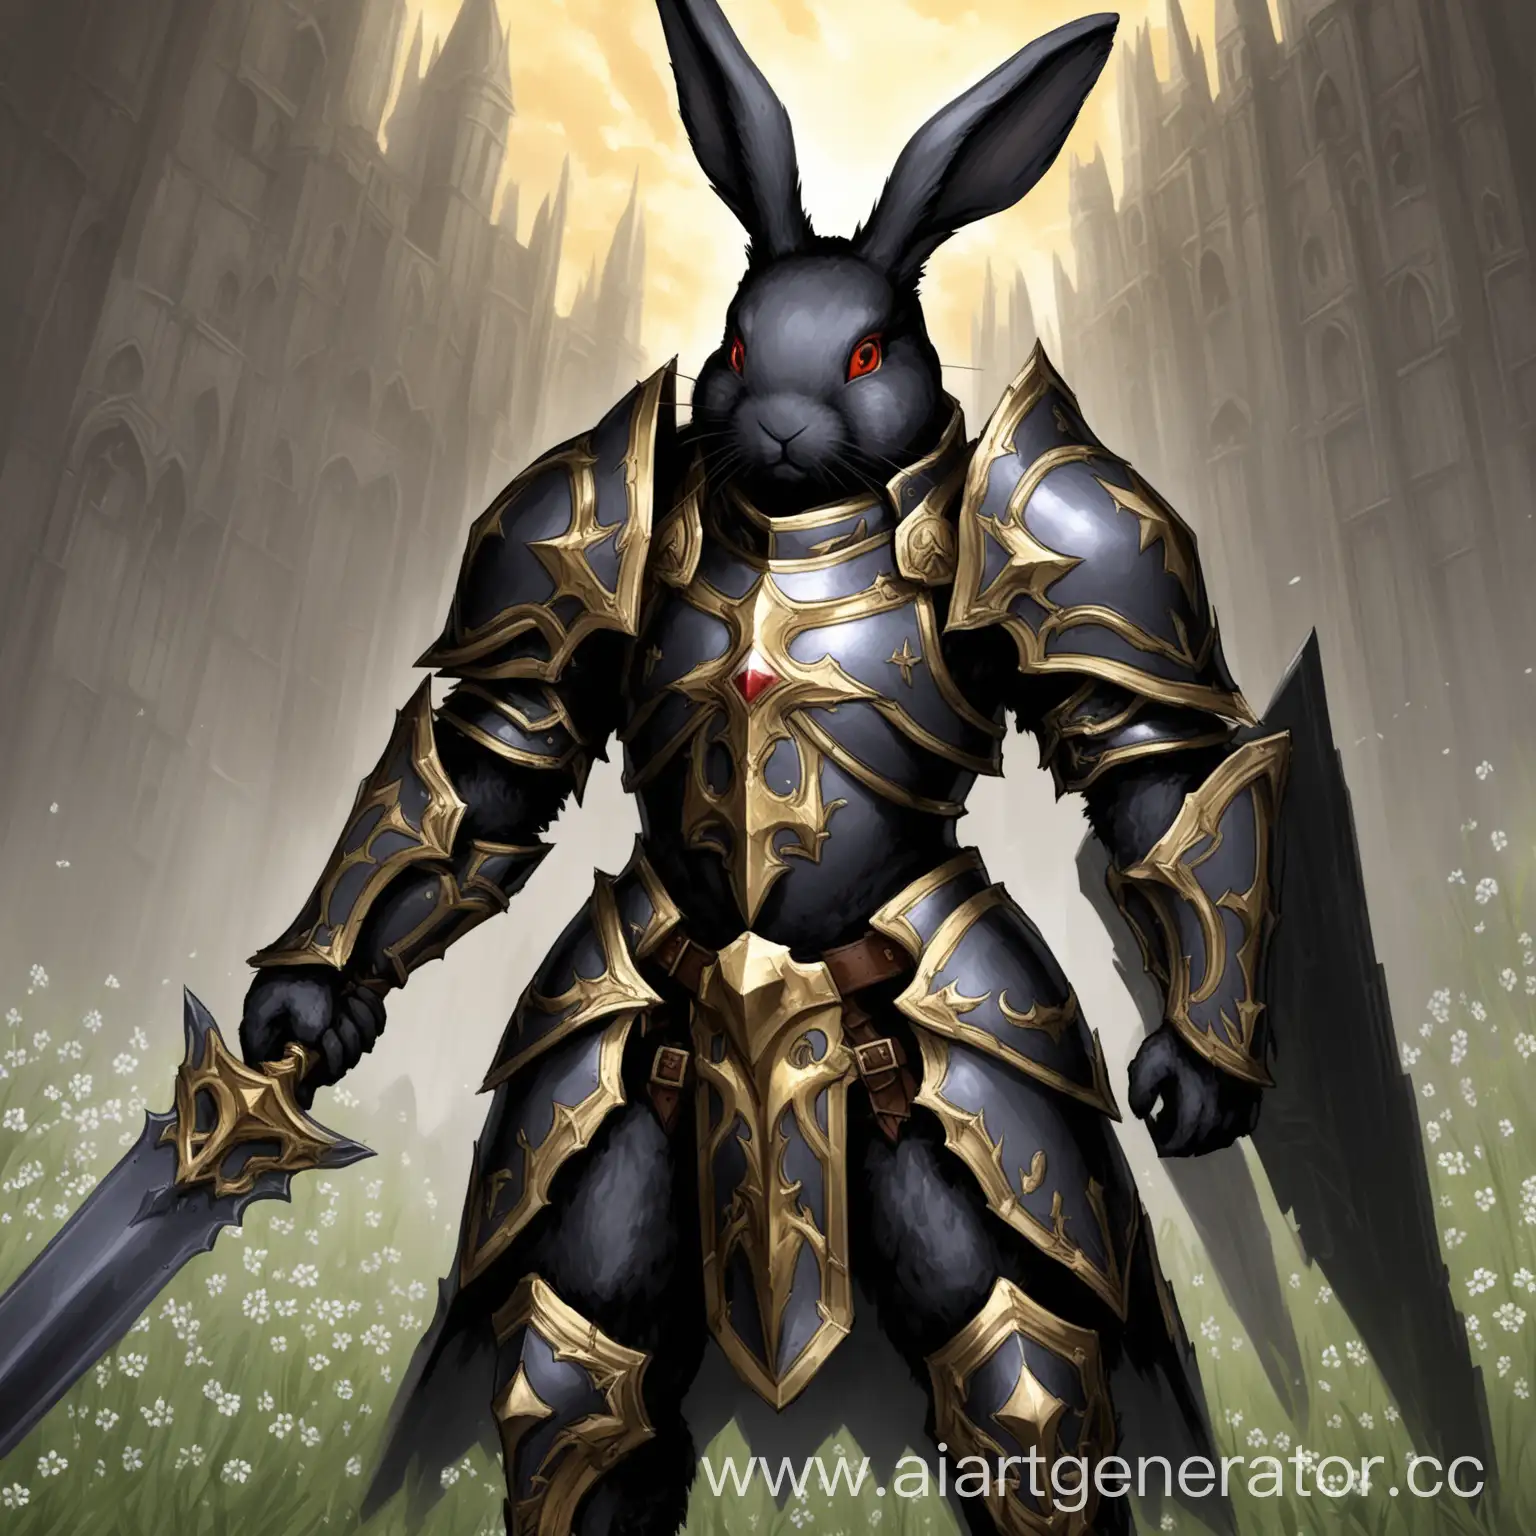 Brave-Black-Rabbit-Paladin-Defending-the-Realm